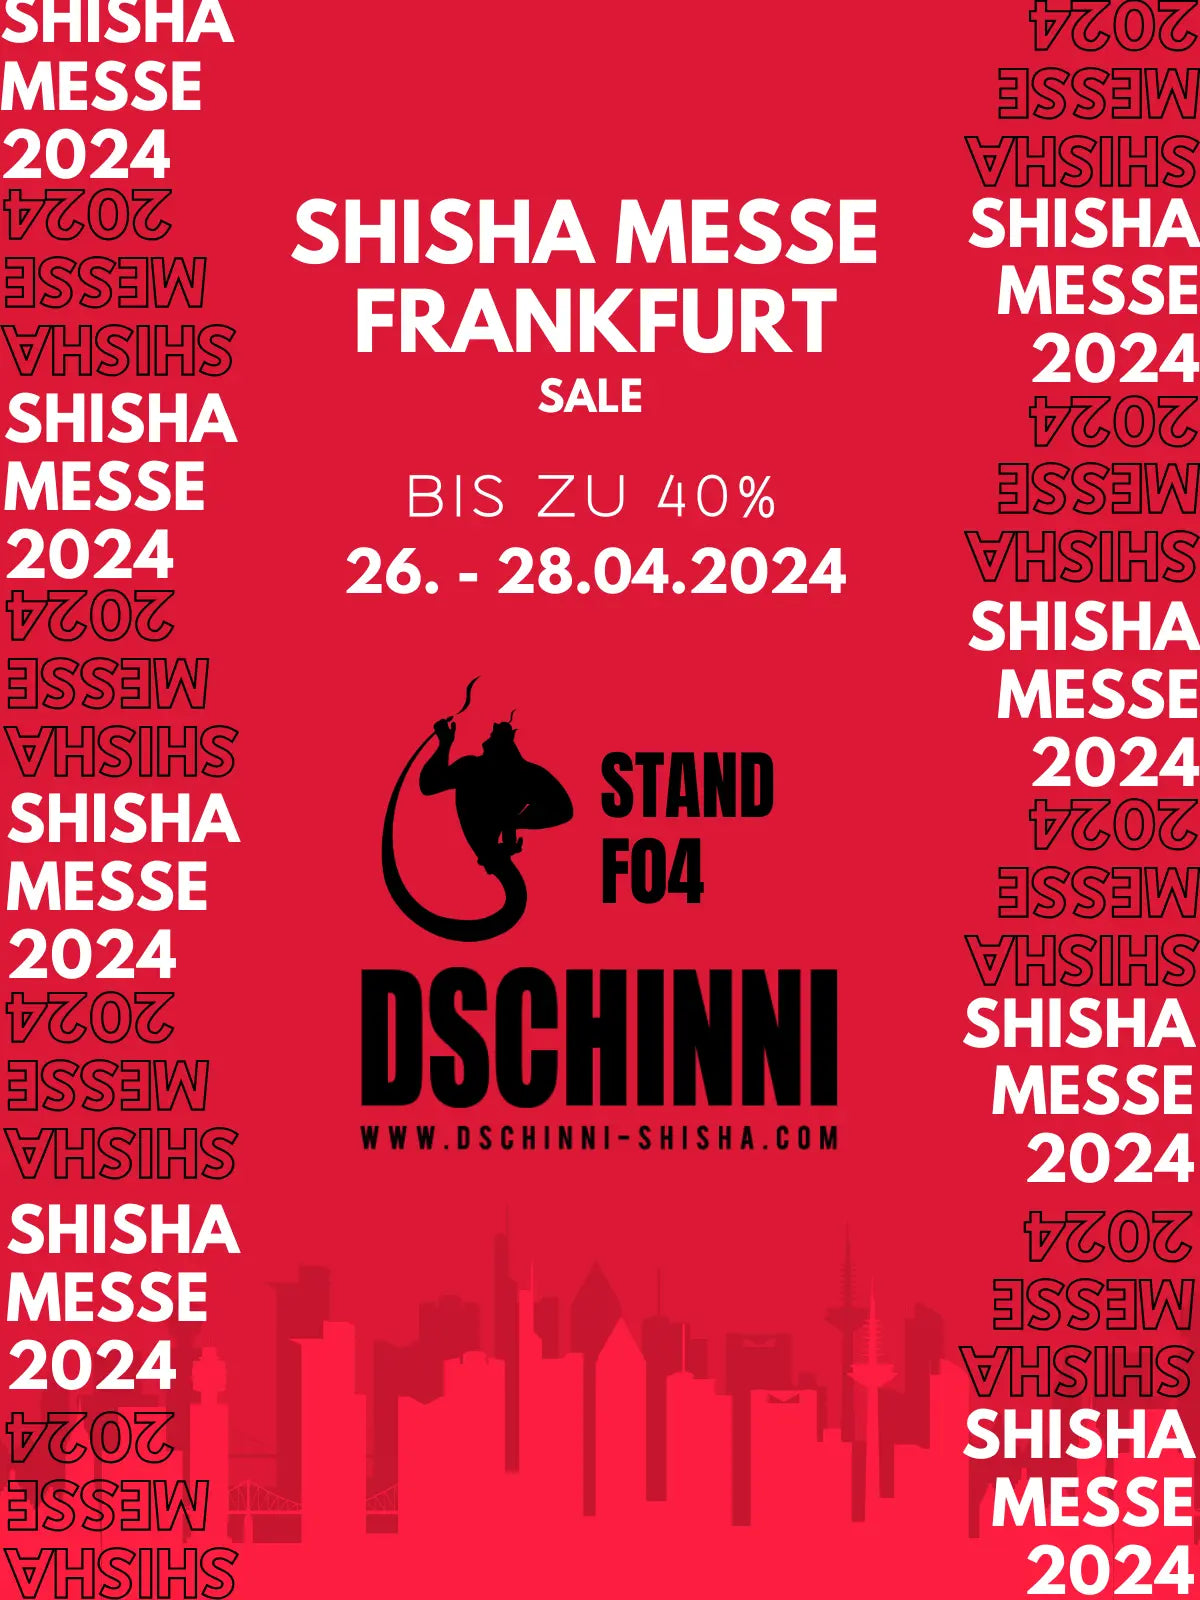 Shisha Messe 2024 Frankfurt Dschinni